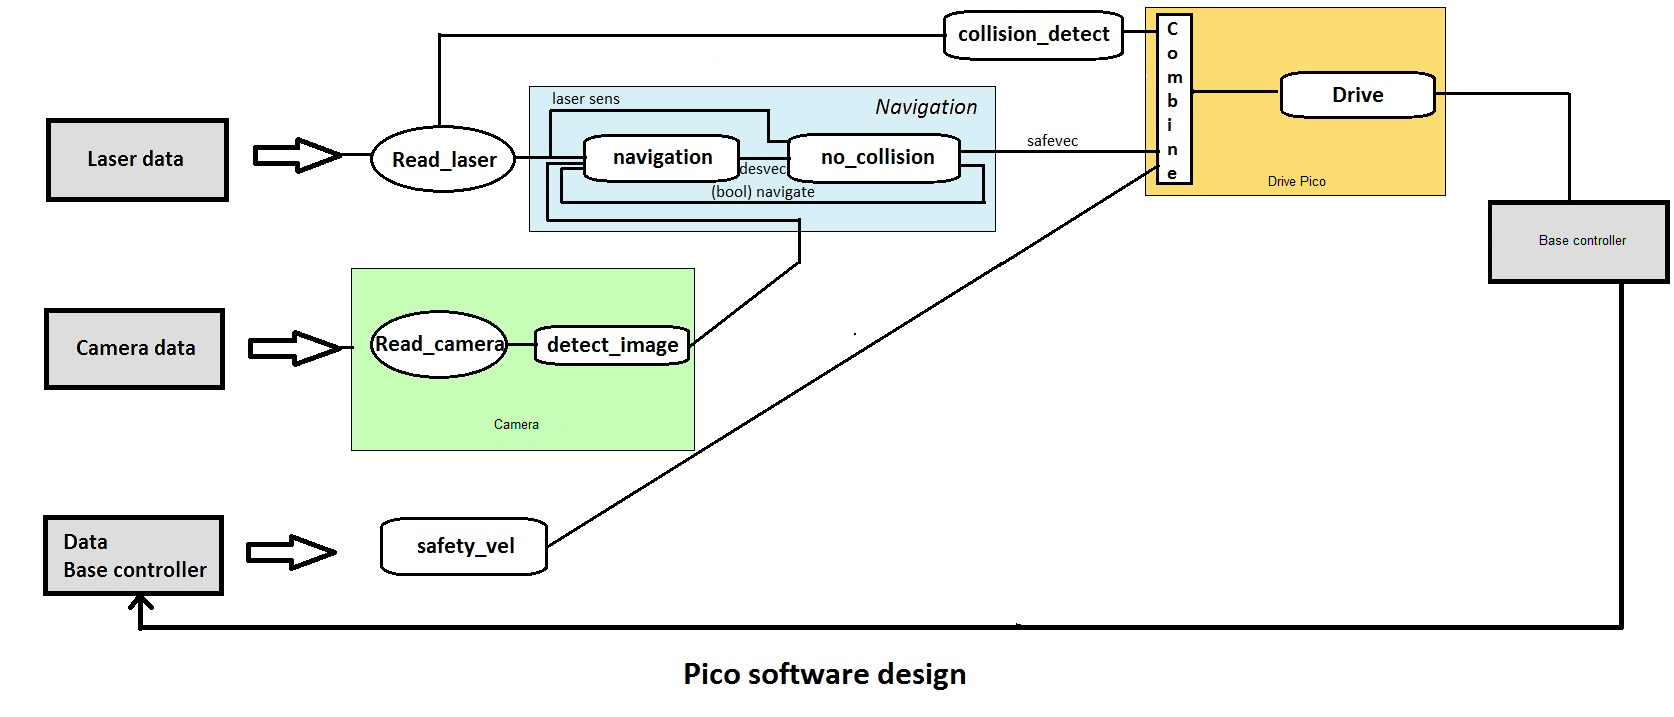 File:Pico software design.png